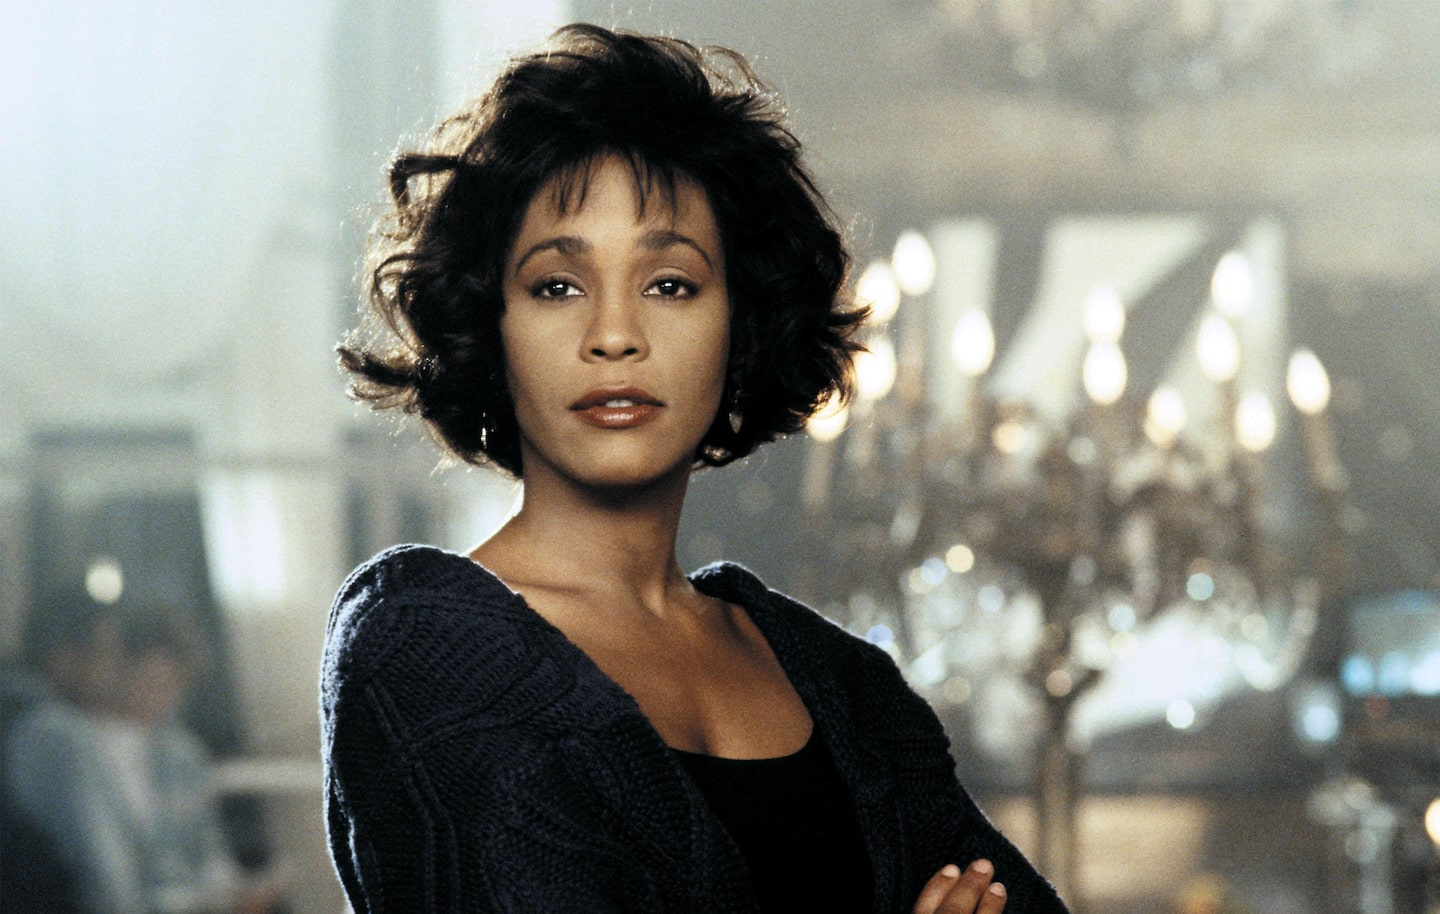 The tragic fate of Whitney Houston